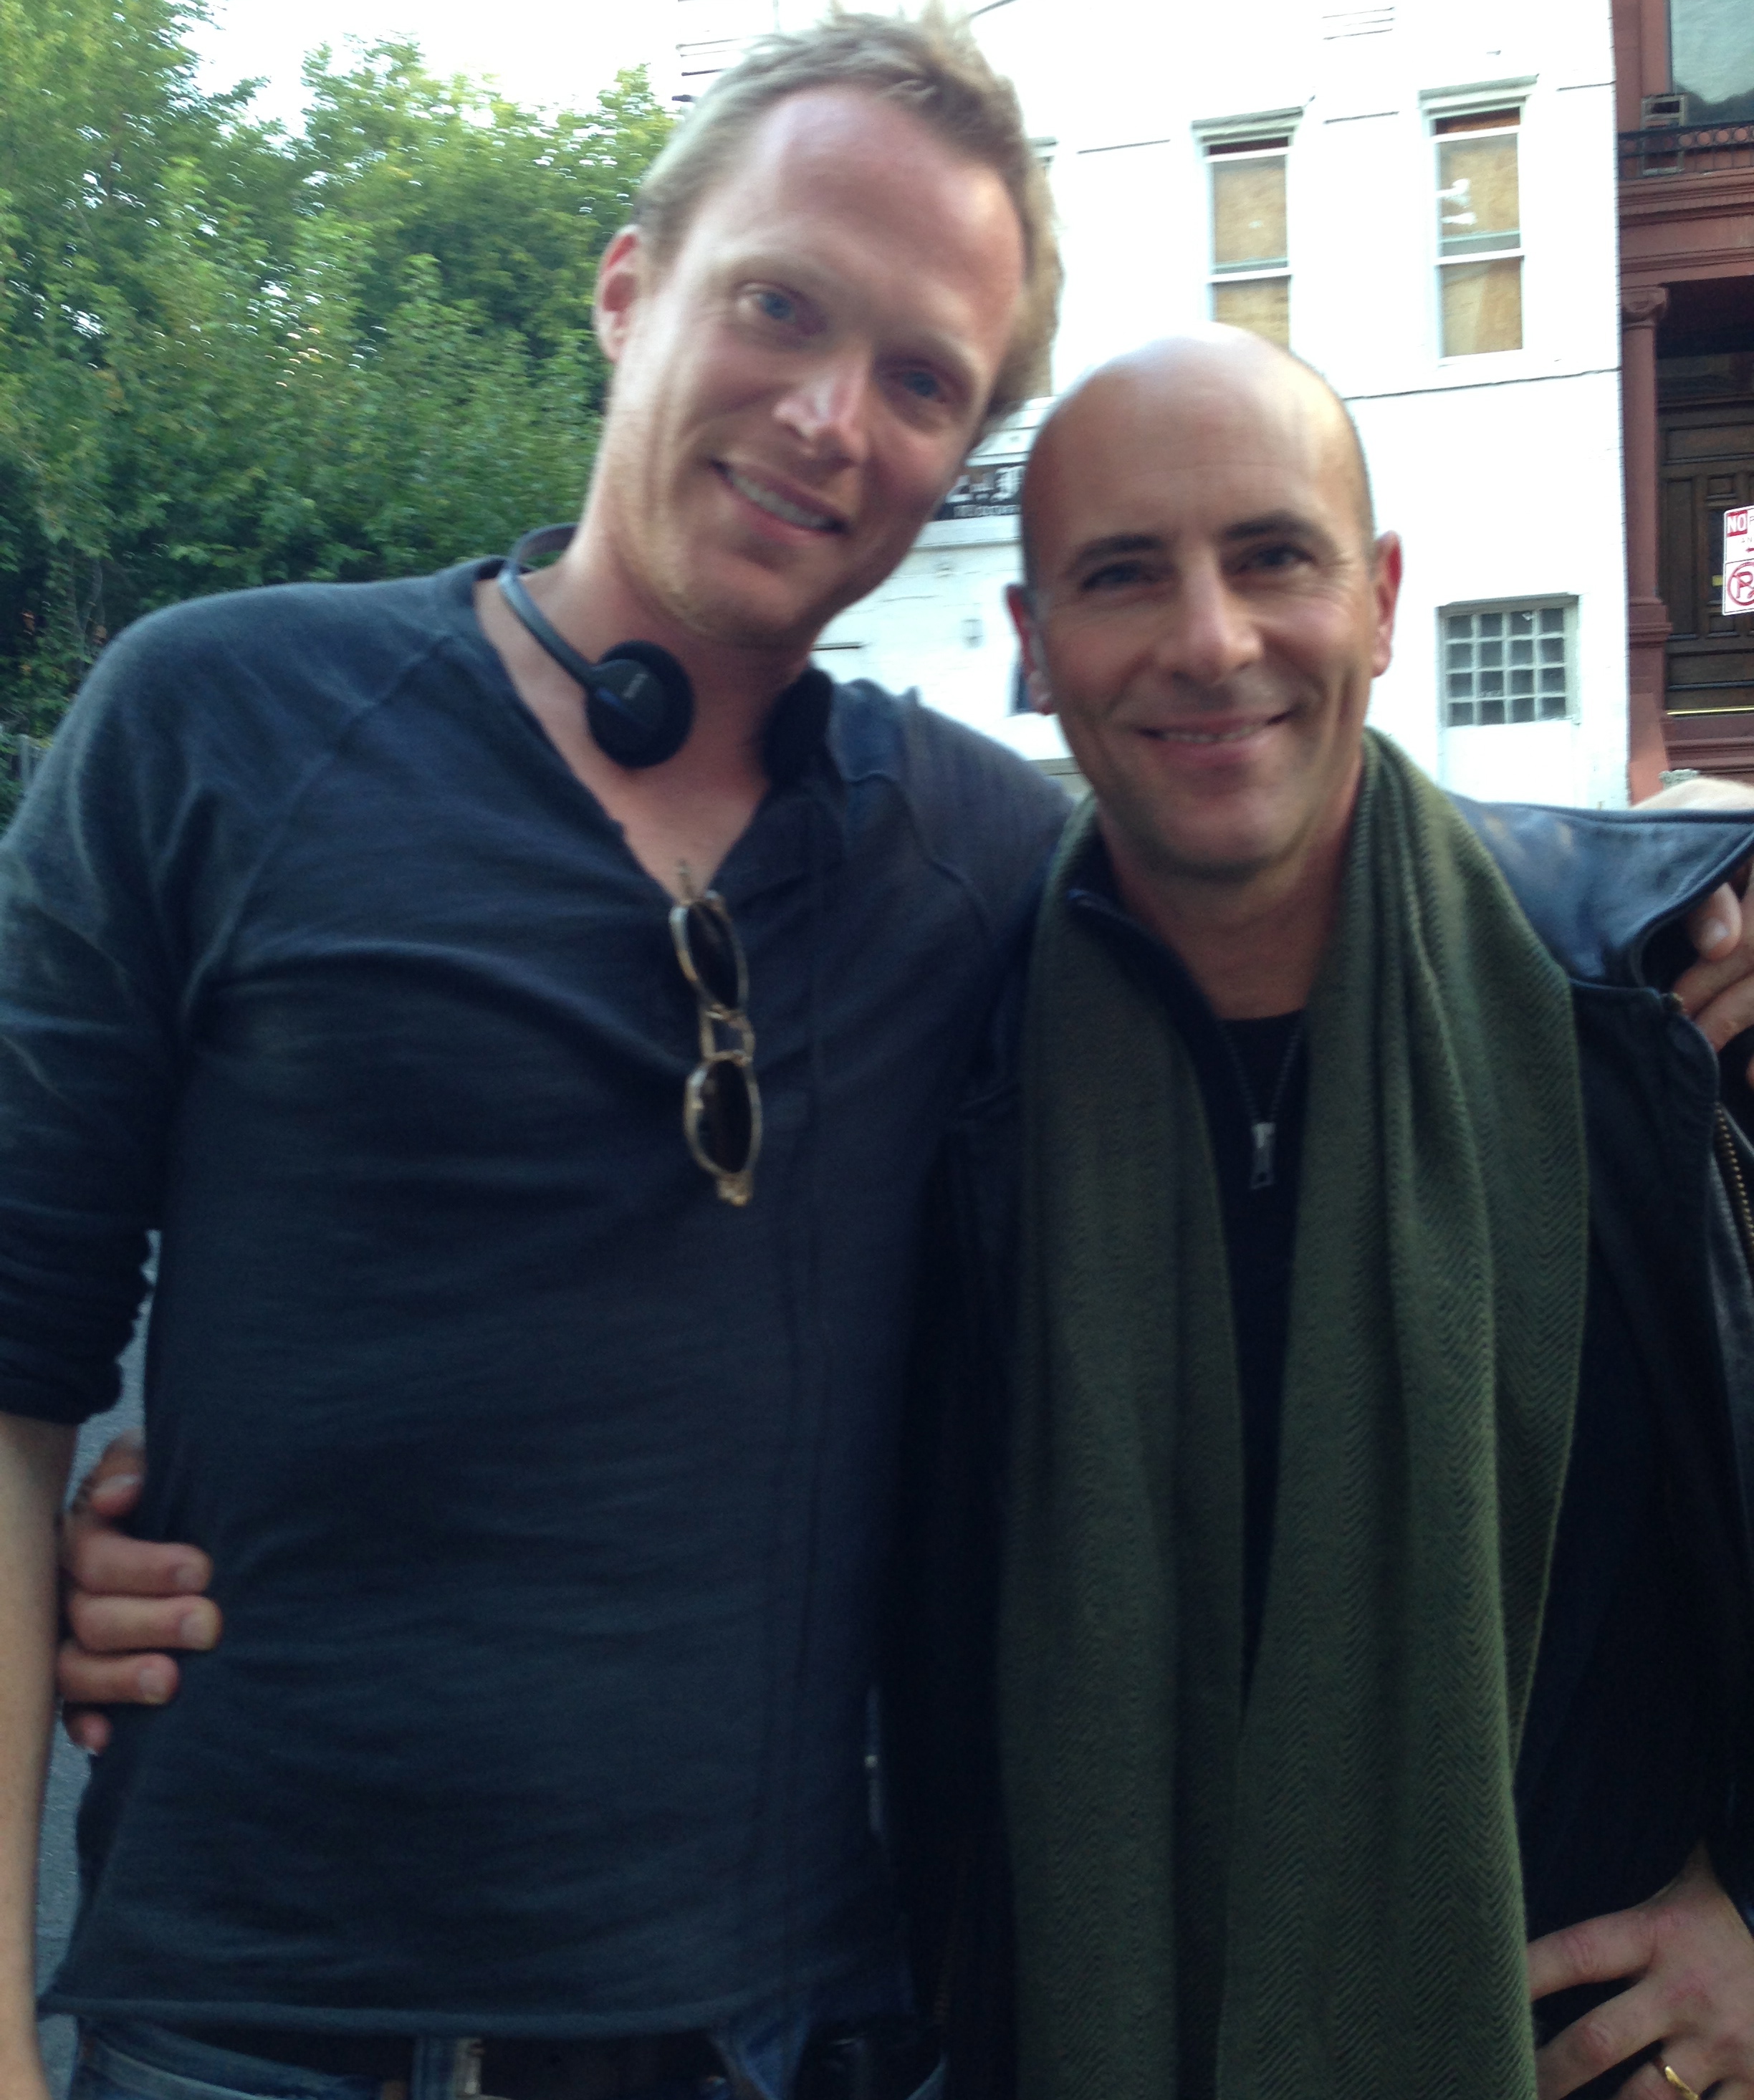 Writer/director Paul Bettany & Jordan Lage on set of SHELTER, Harlem, NYC (2013).